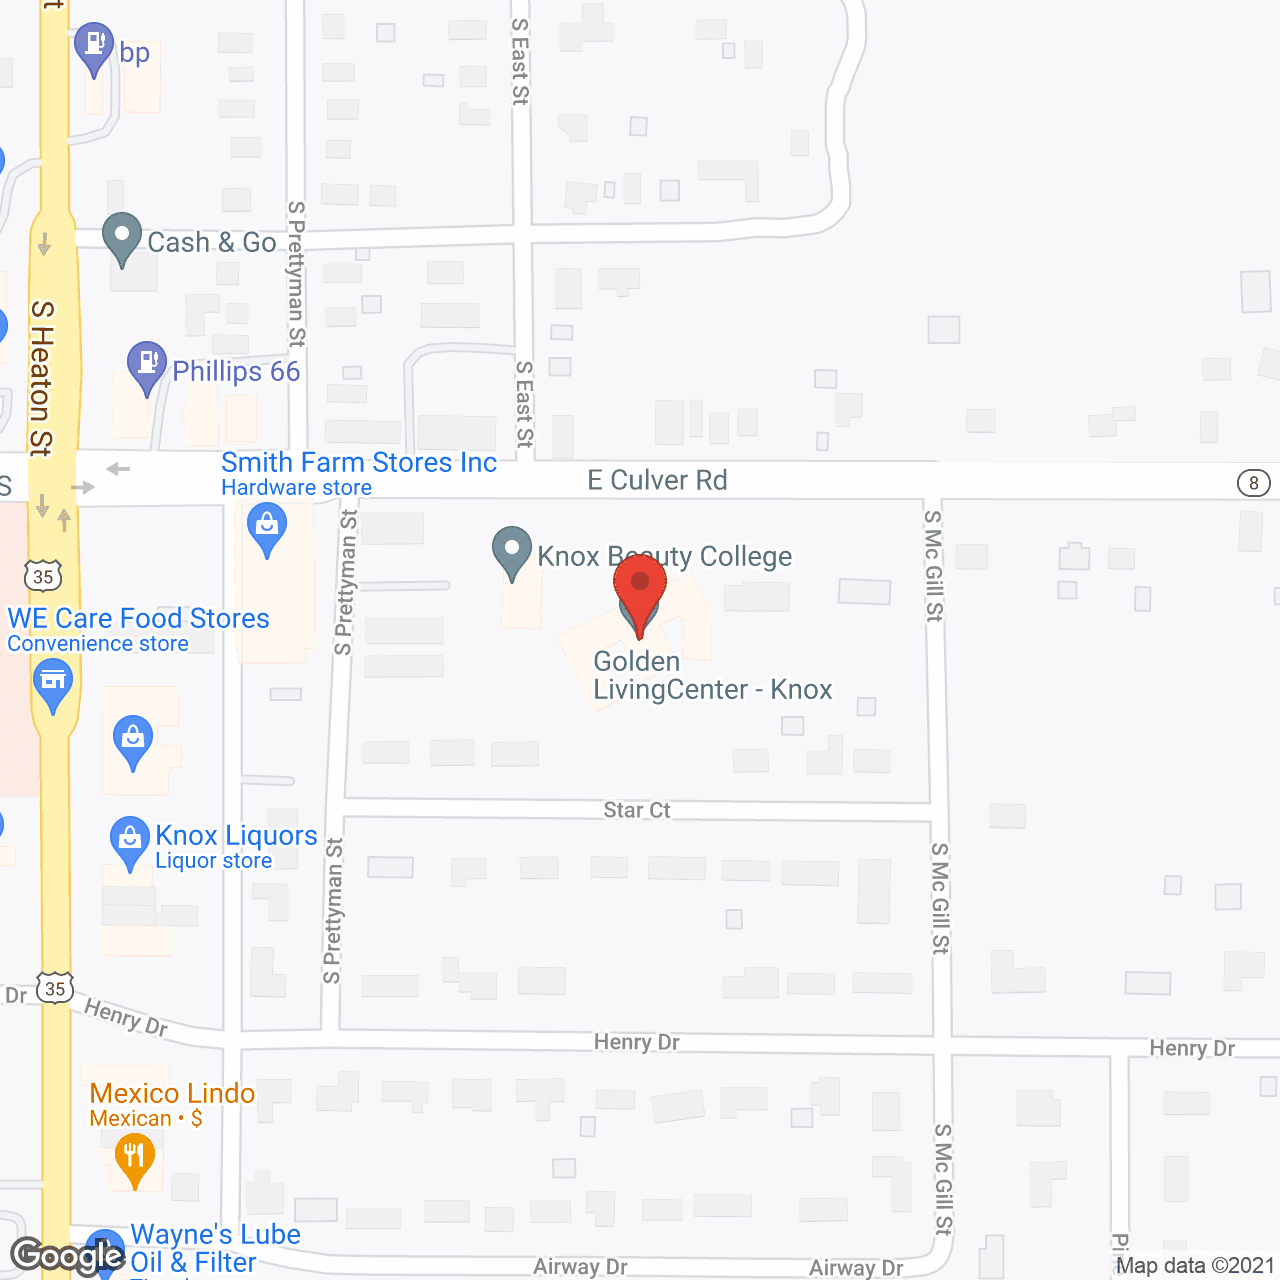 Golden LivingCenter - Knox in google map